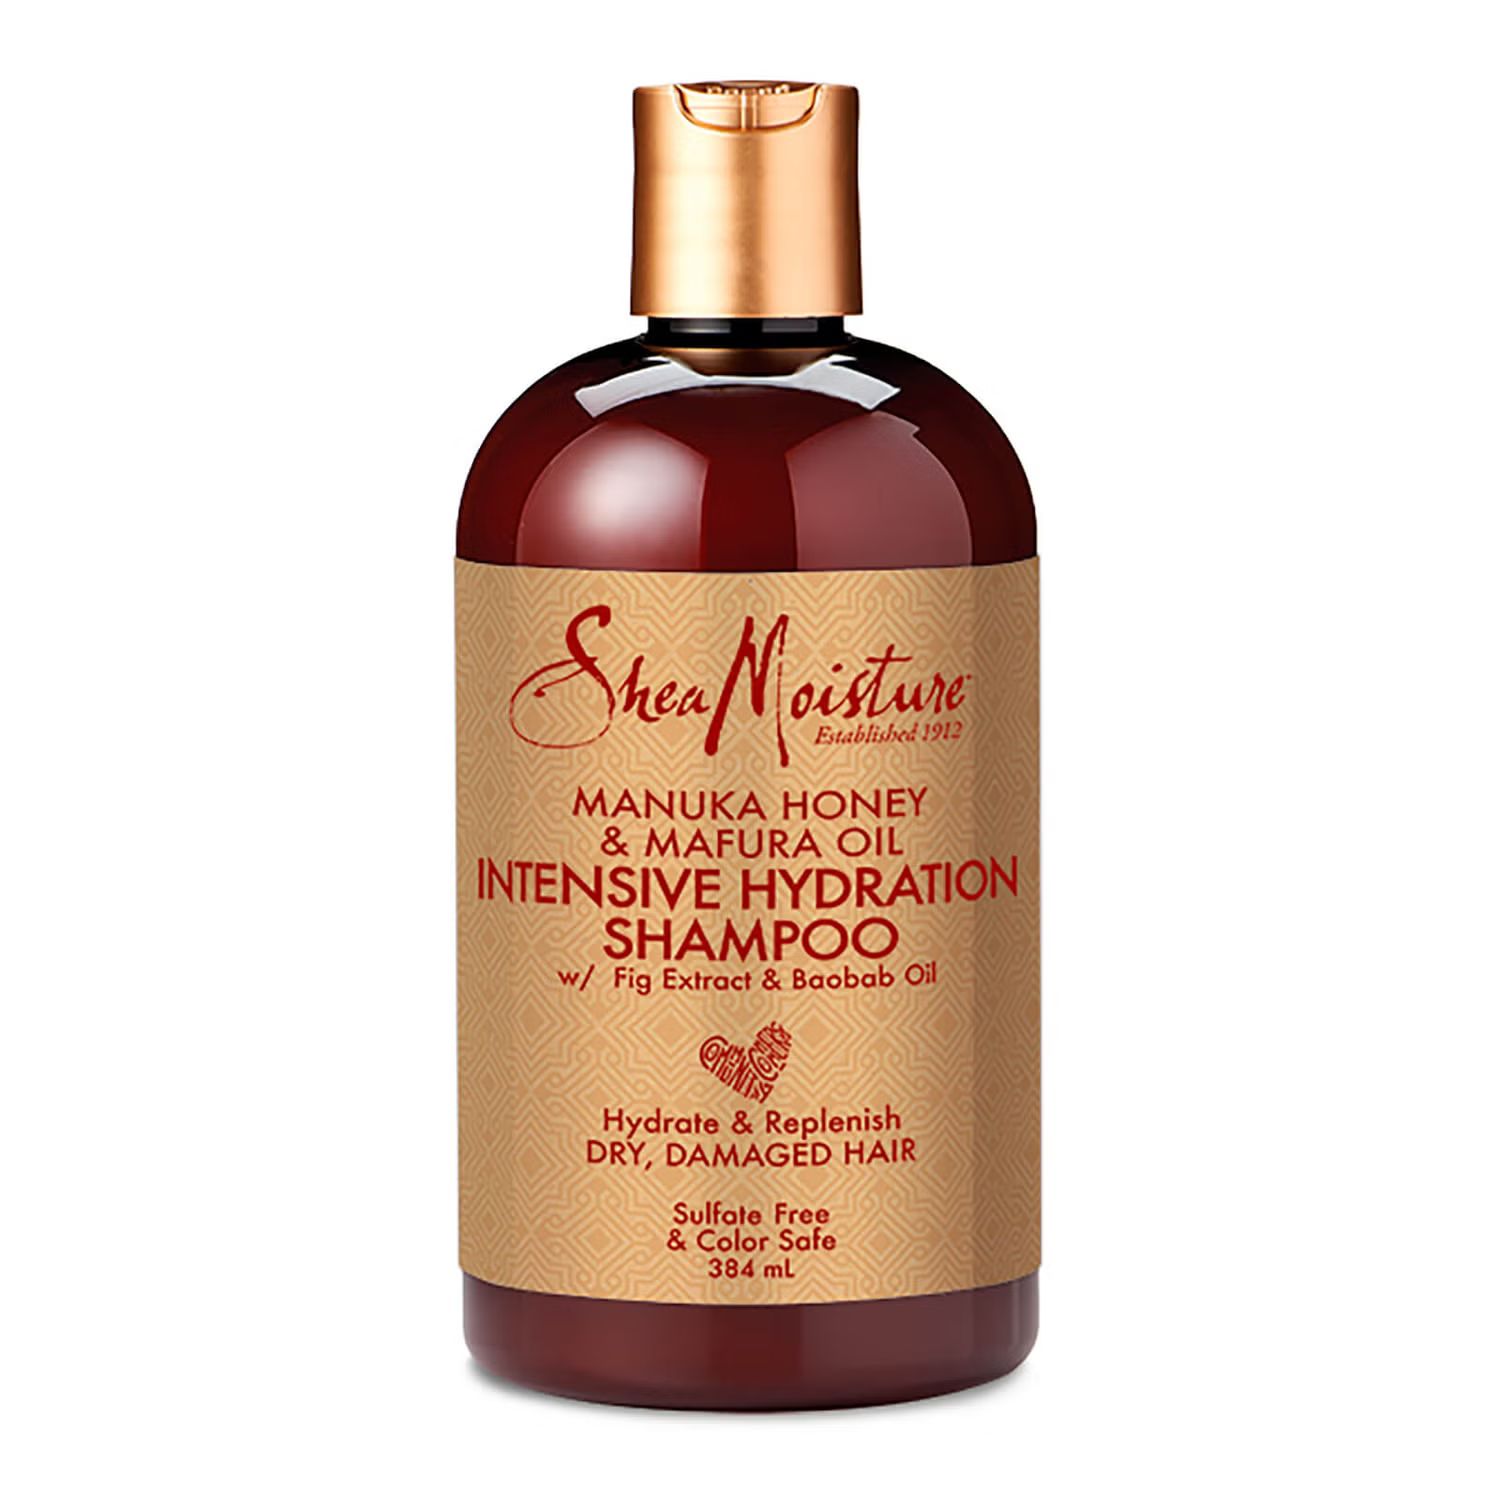 Shea Moisture Manuka Honey & Mafura Oil Intensive Hydration Shampoo 384ml | Look Fantastic (ROW)